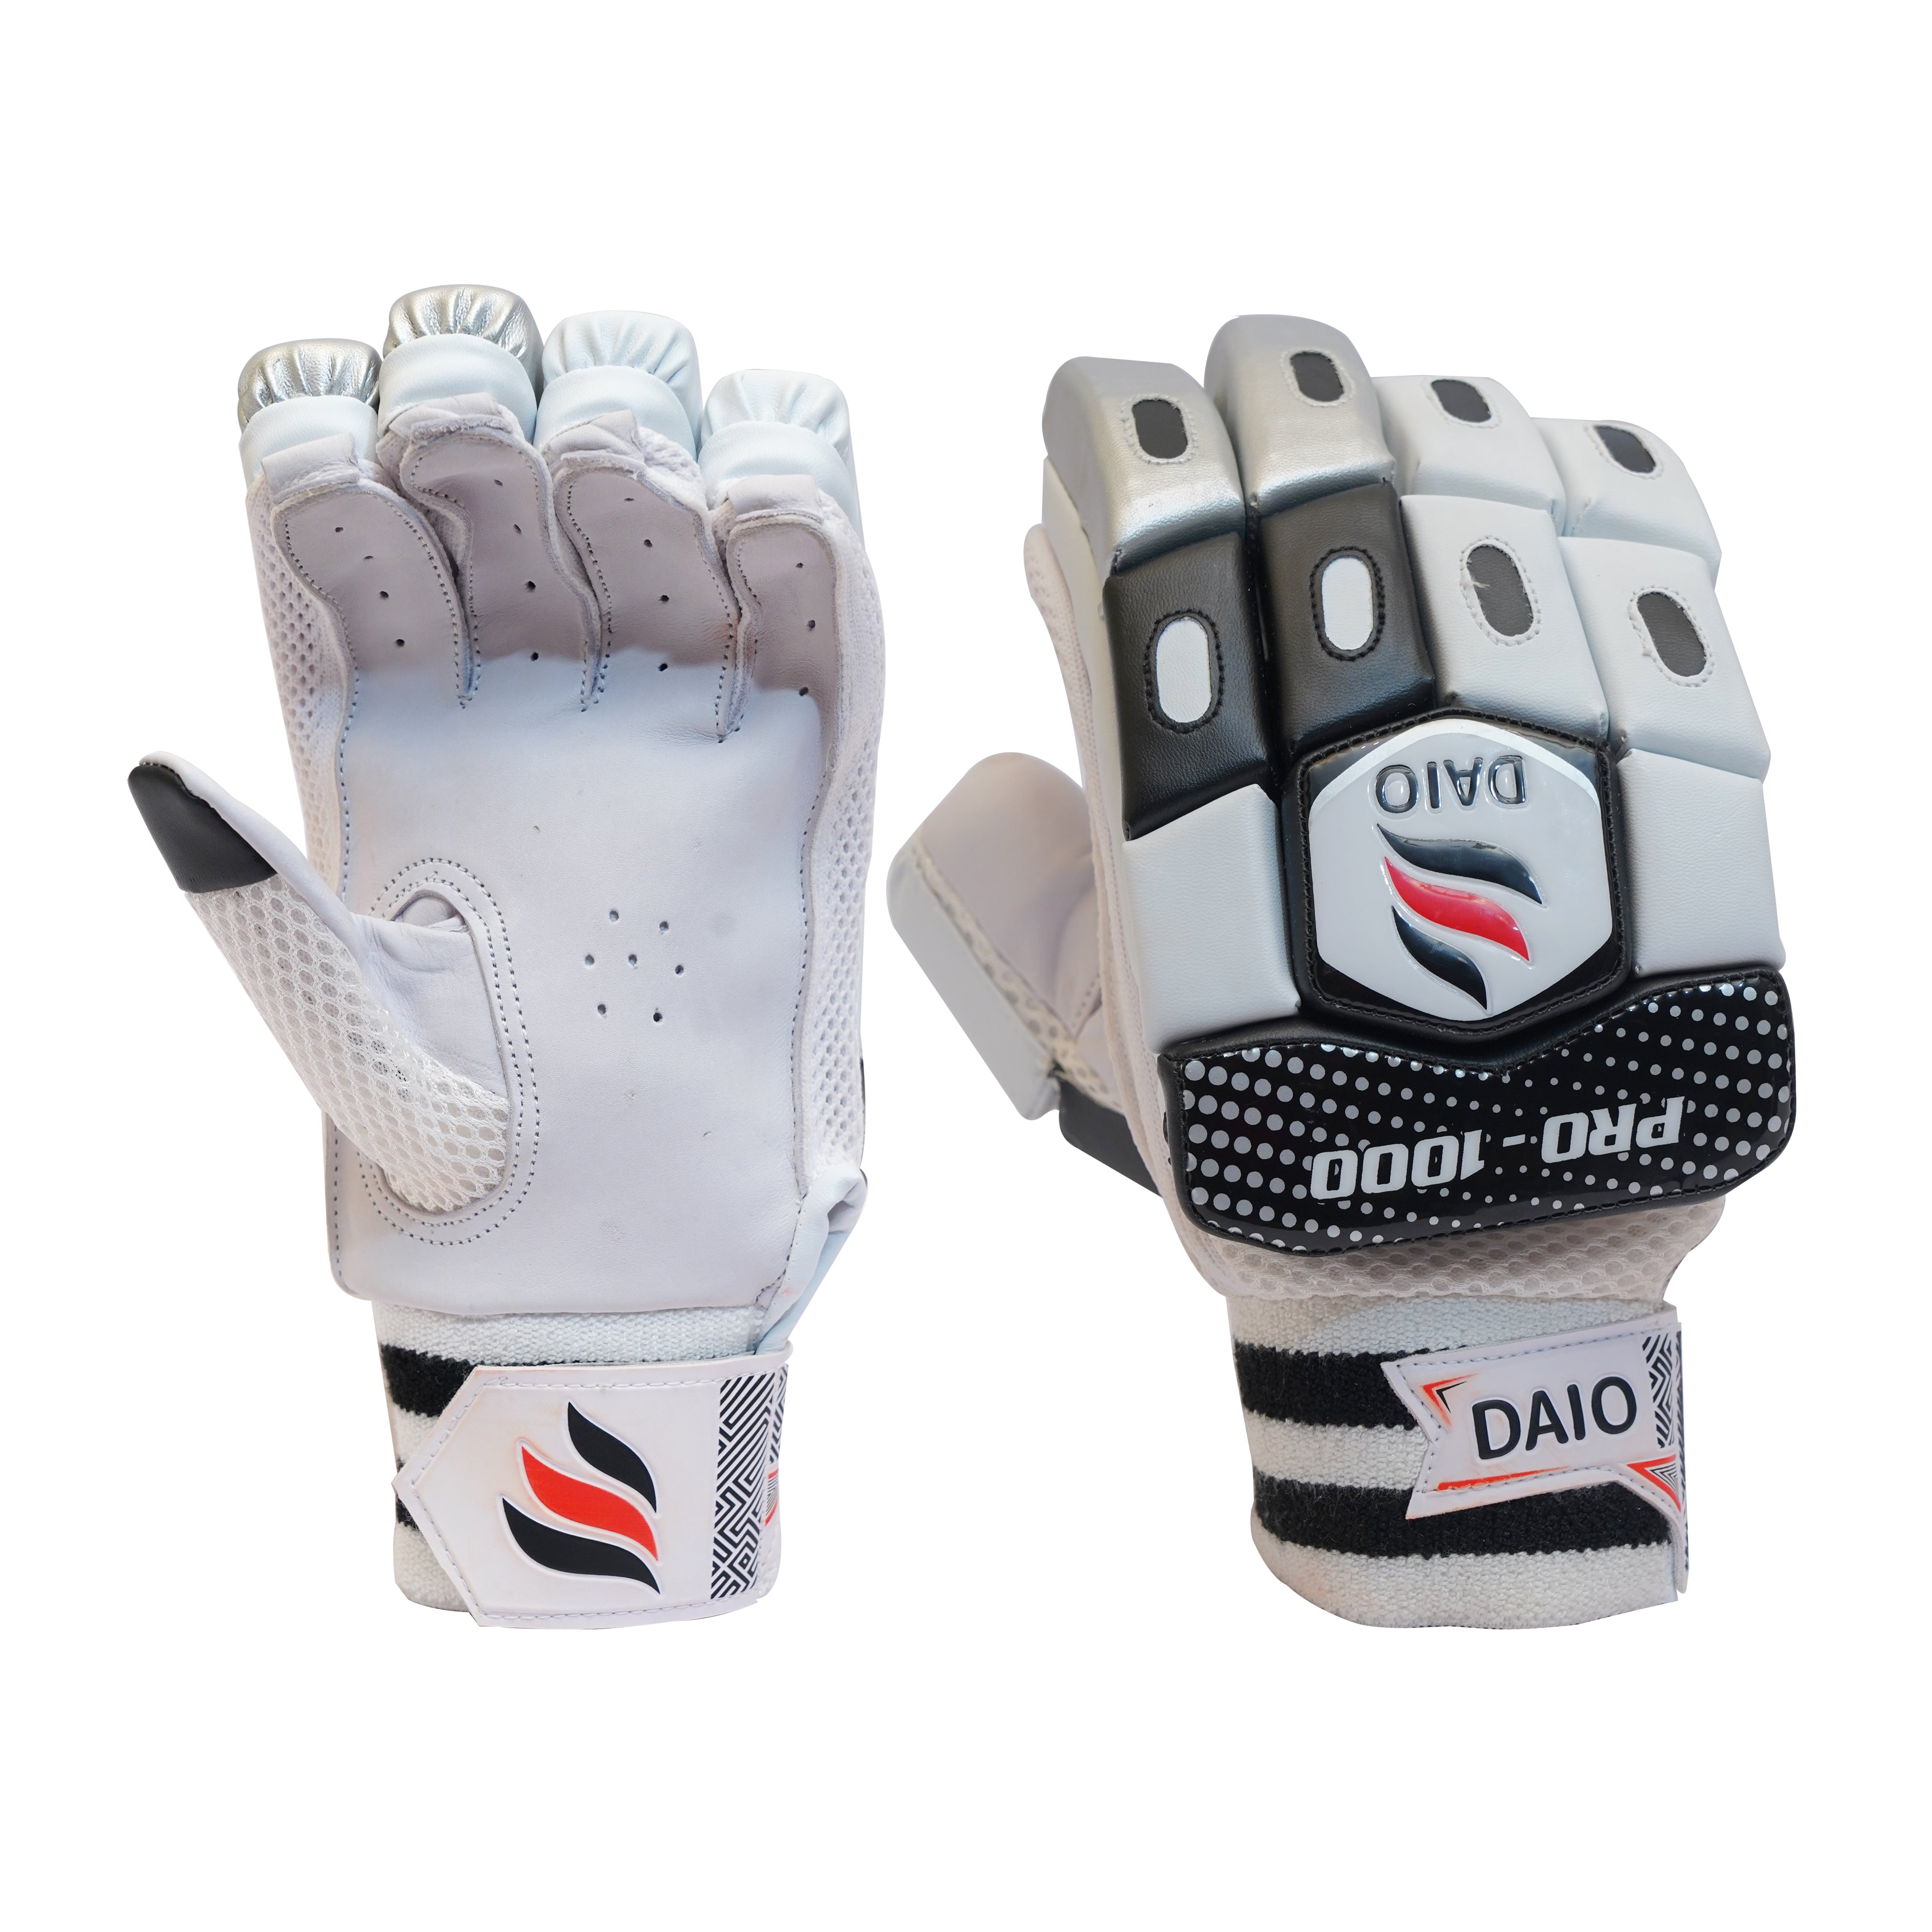 Daio PRO-1000 youth batting gloves